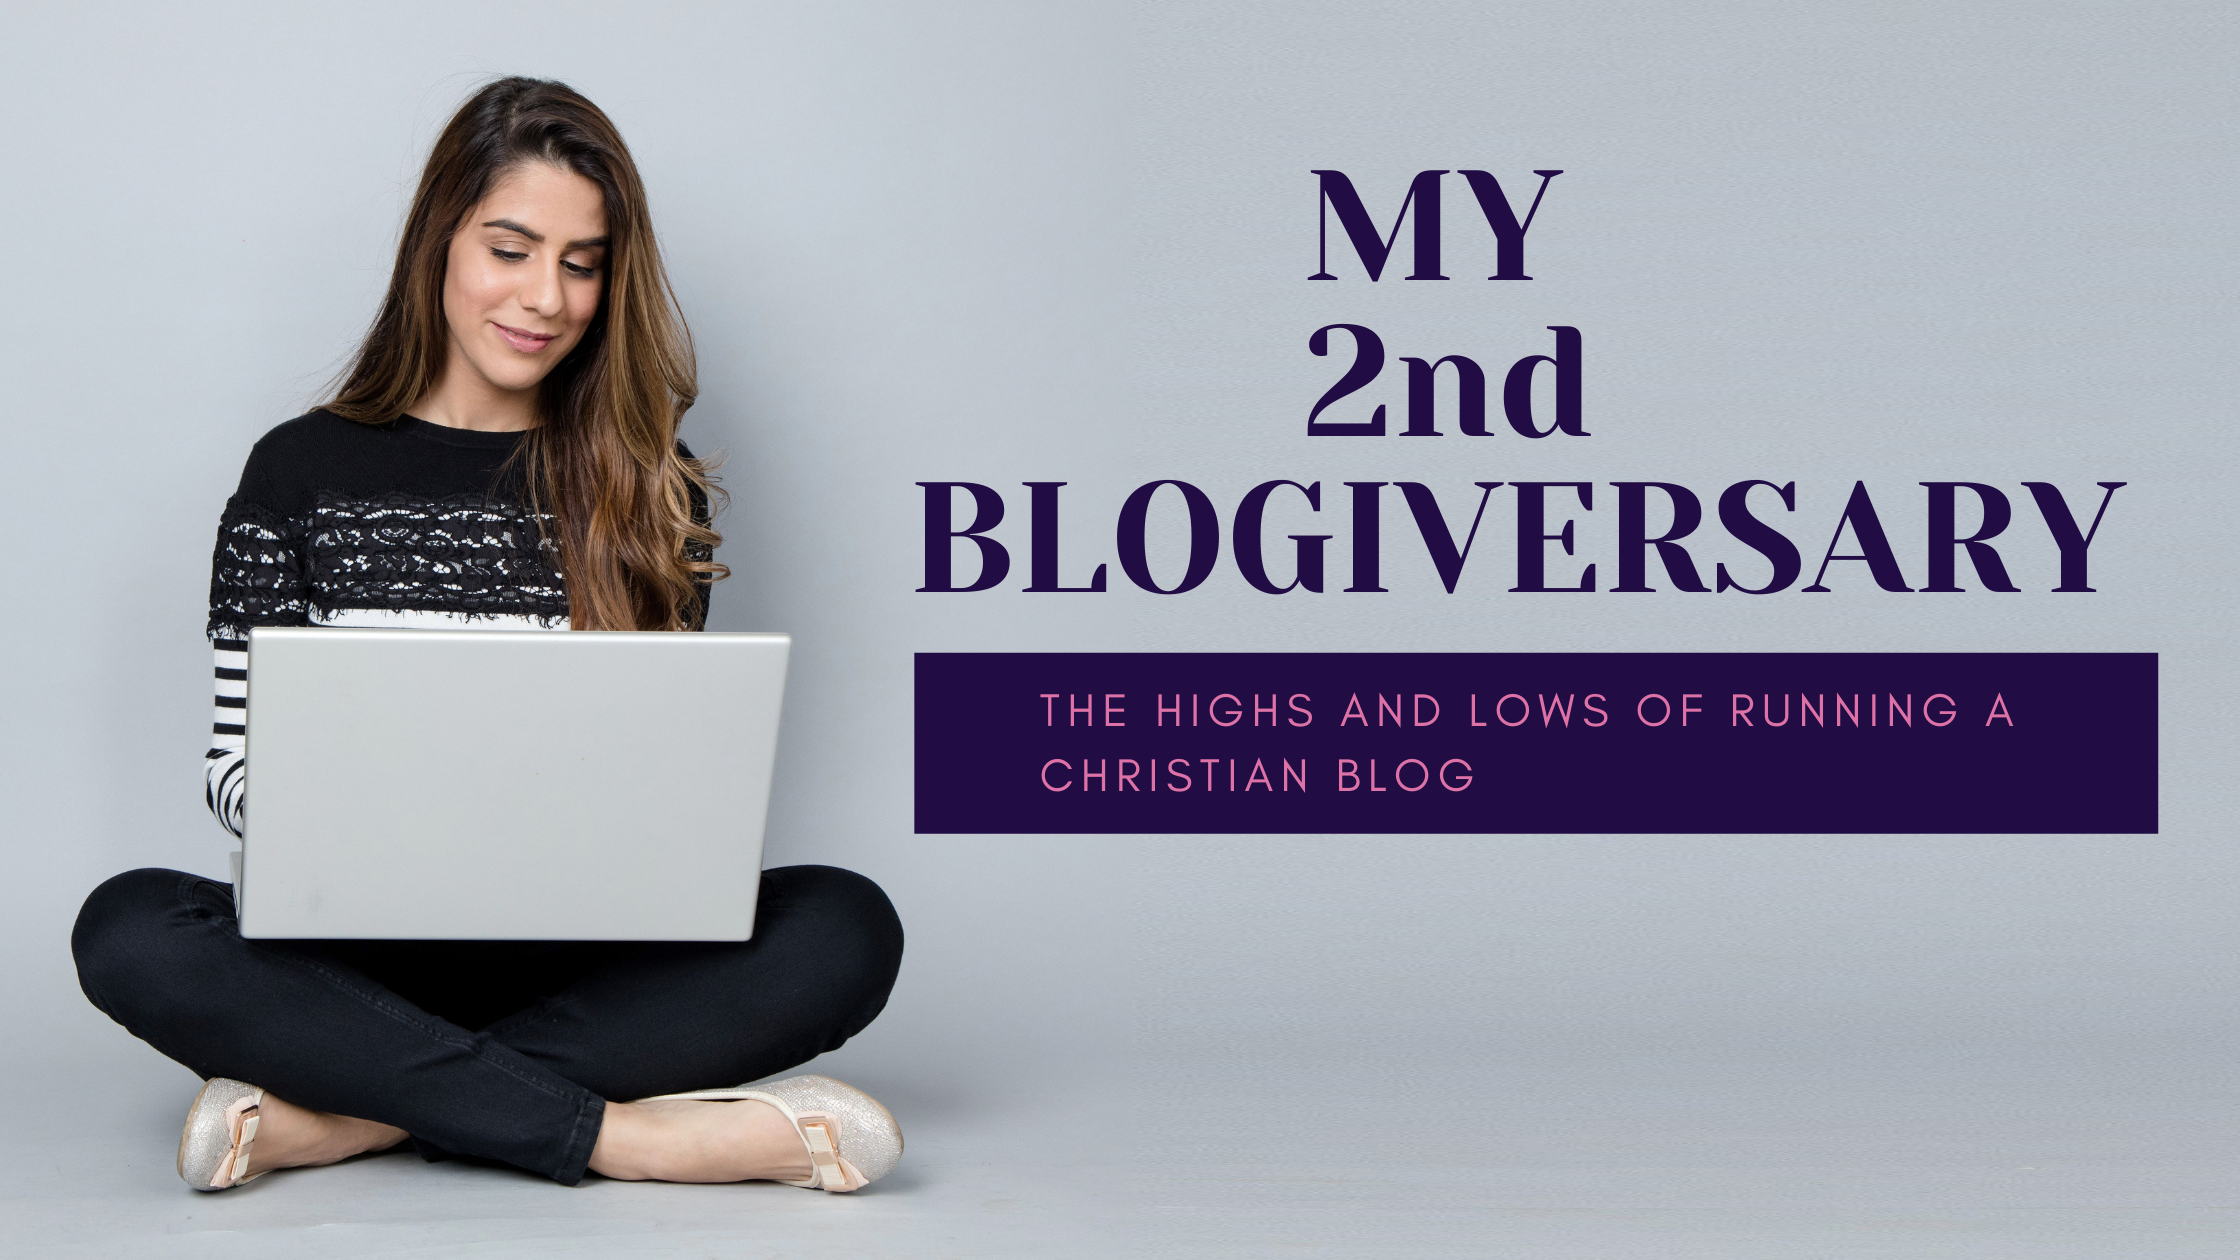 Christian blog